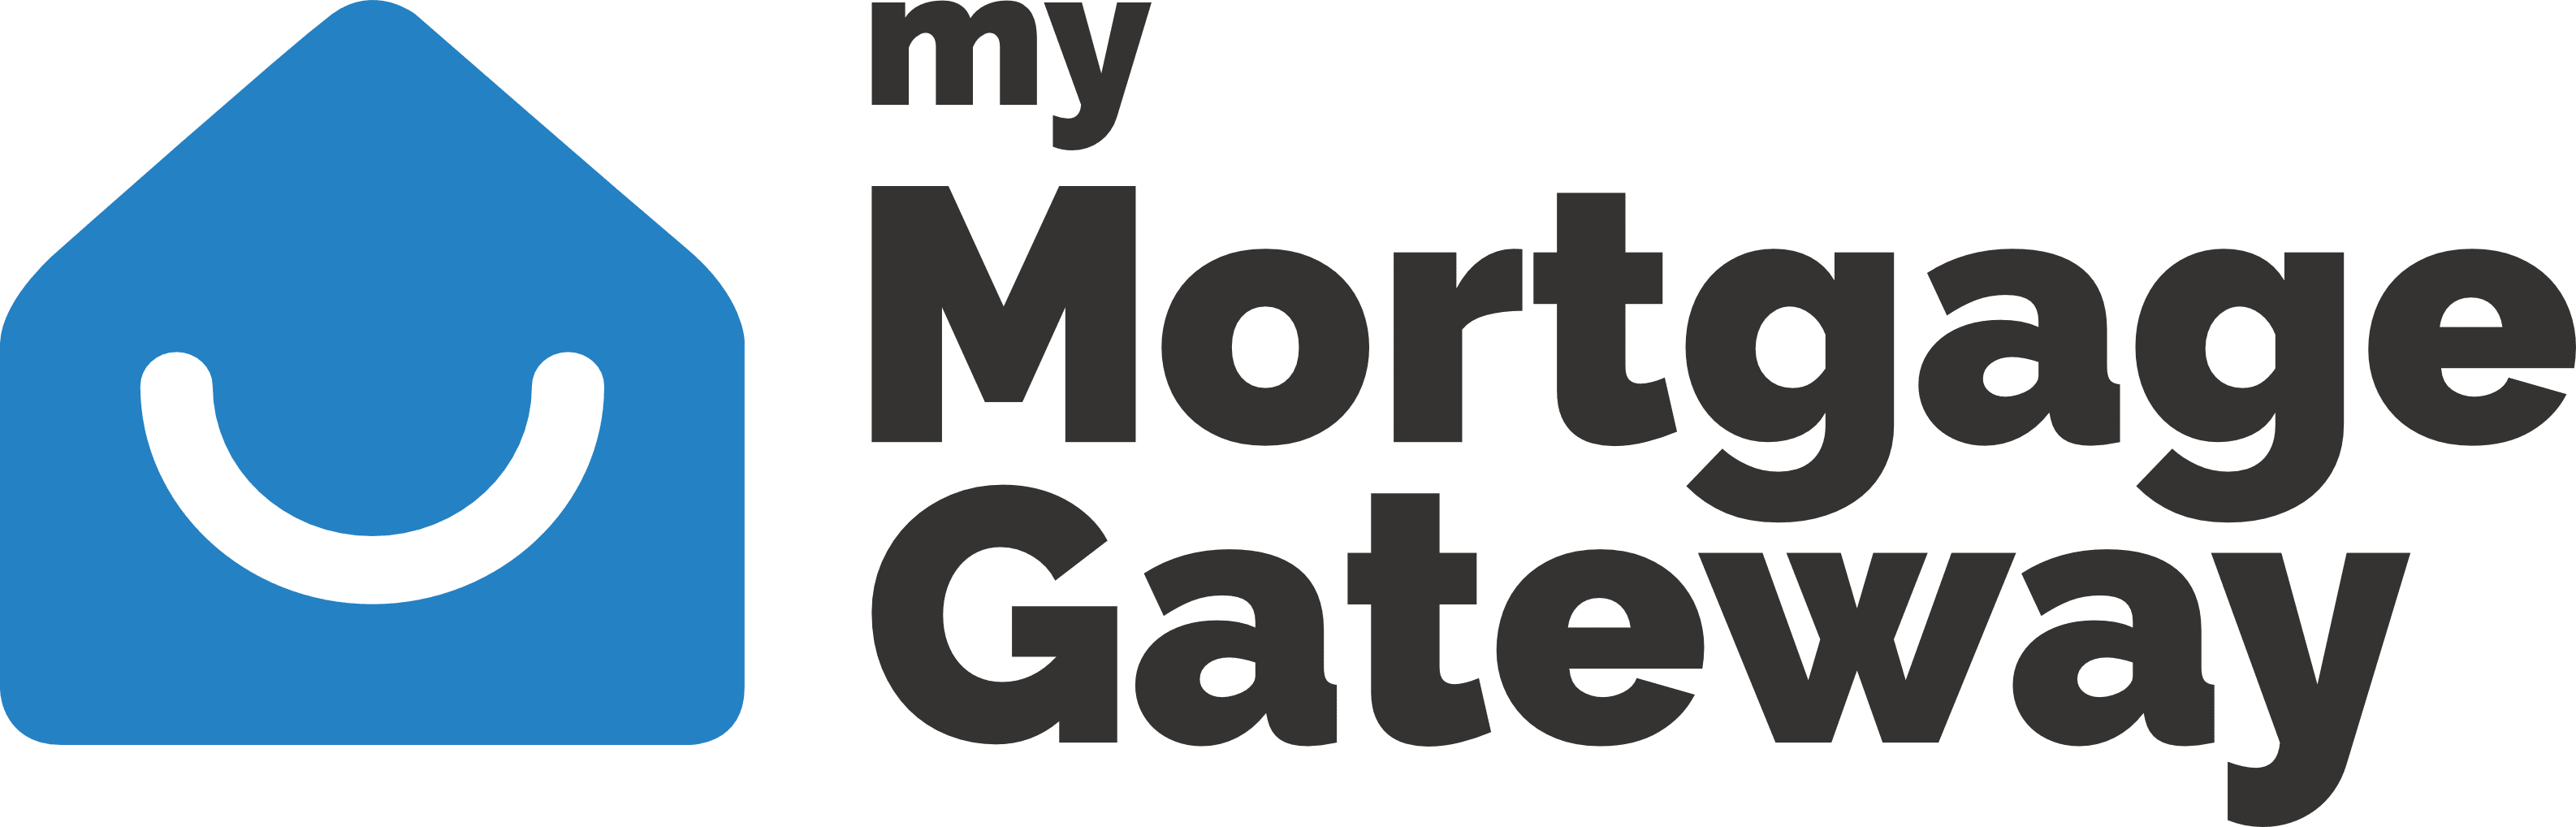 Mortgage Gateway